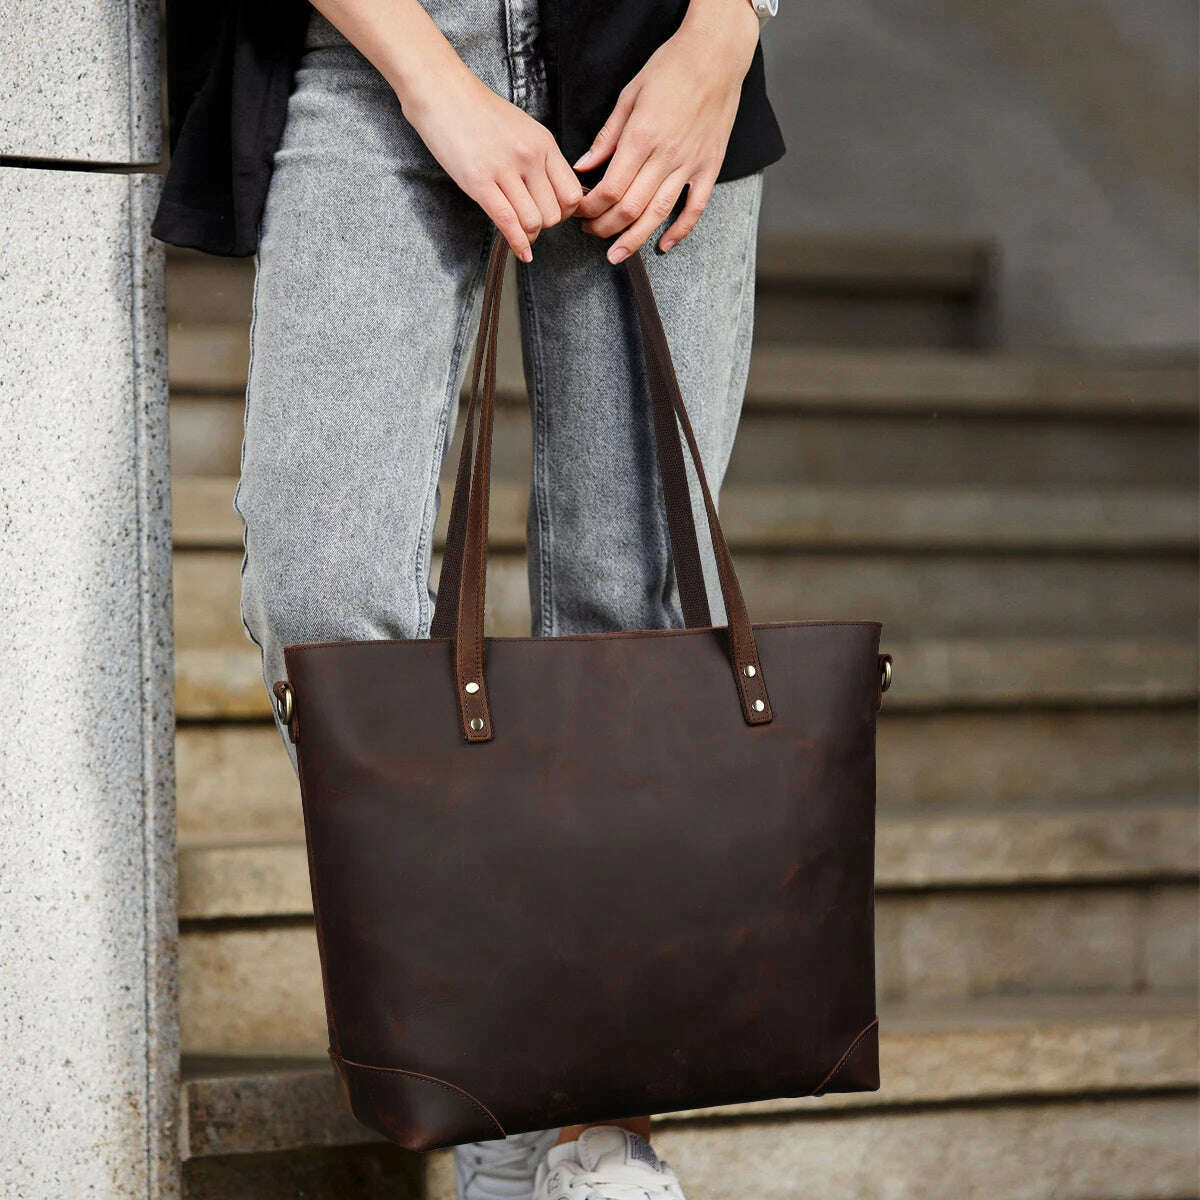 KIMLUD, S-ZONE Vintage Genuine Leather Shoulder Bag Work Totes for Women Purse Handbag with Back Zipper Pocket Large, KIMLUD Womens Clothes